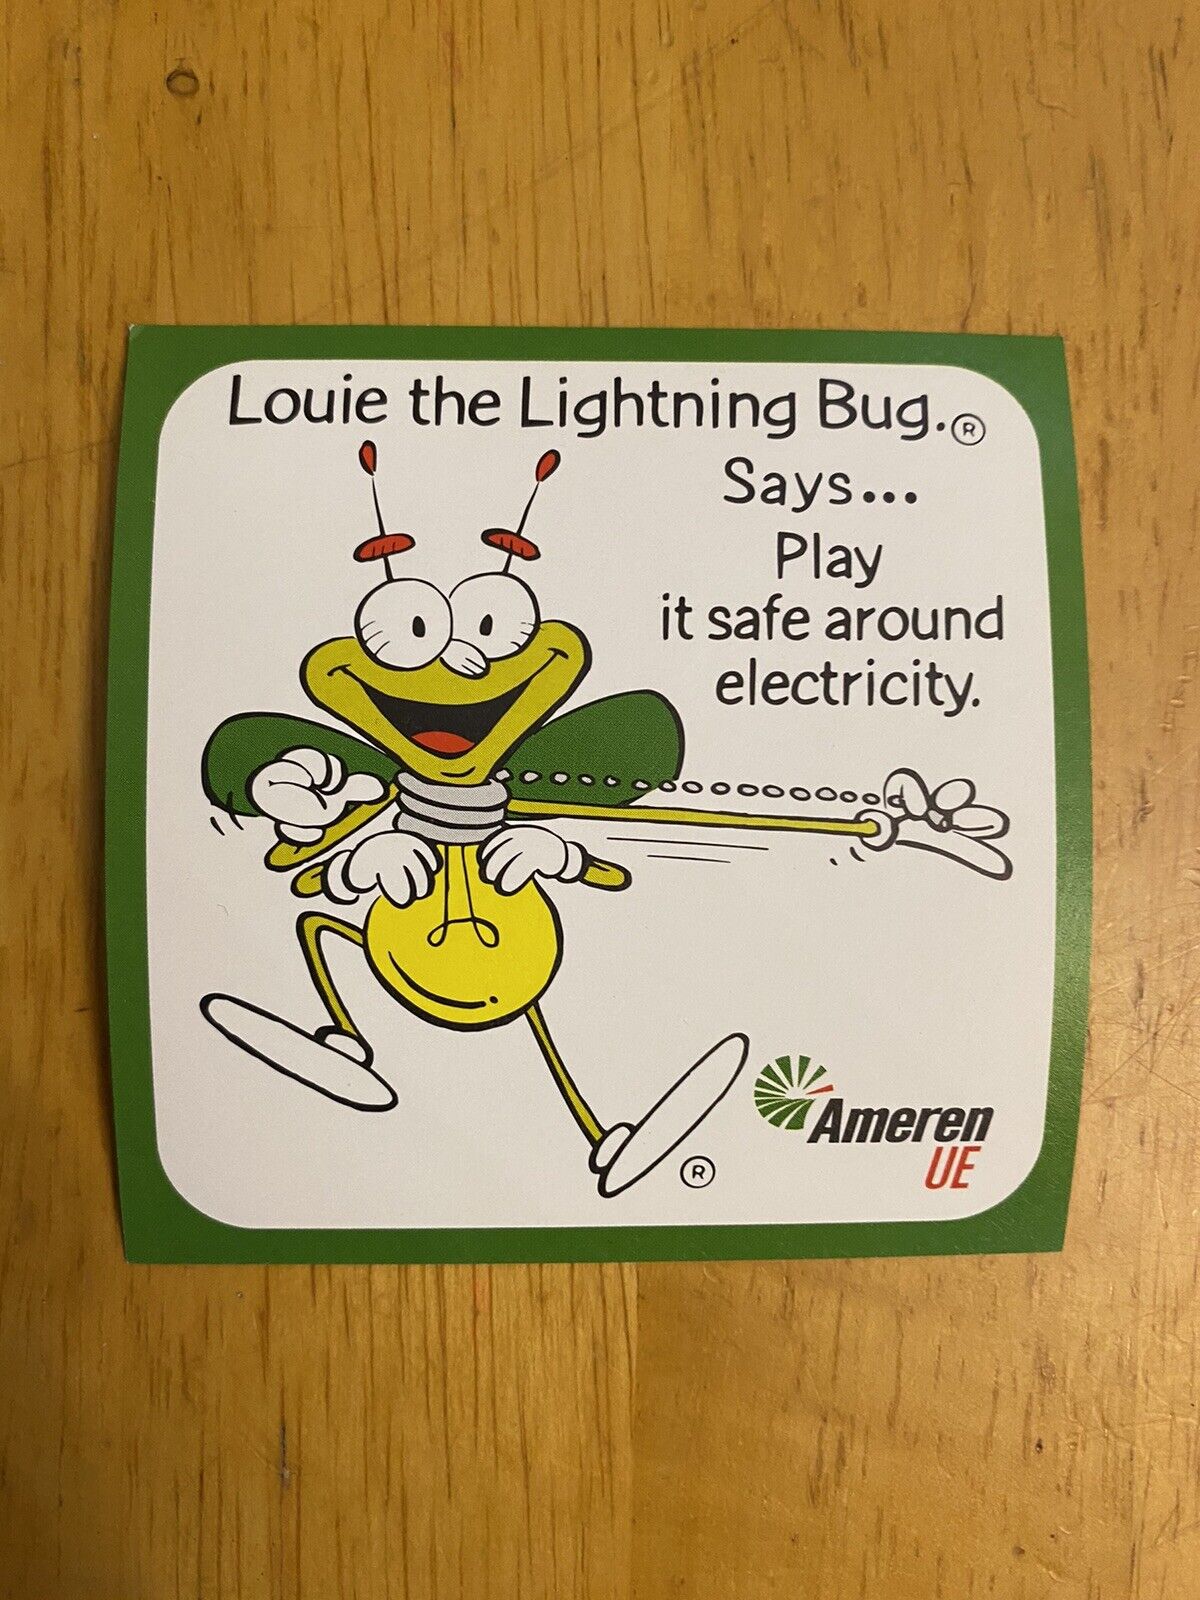 Louie the Lightning Bug sticker